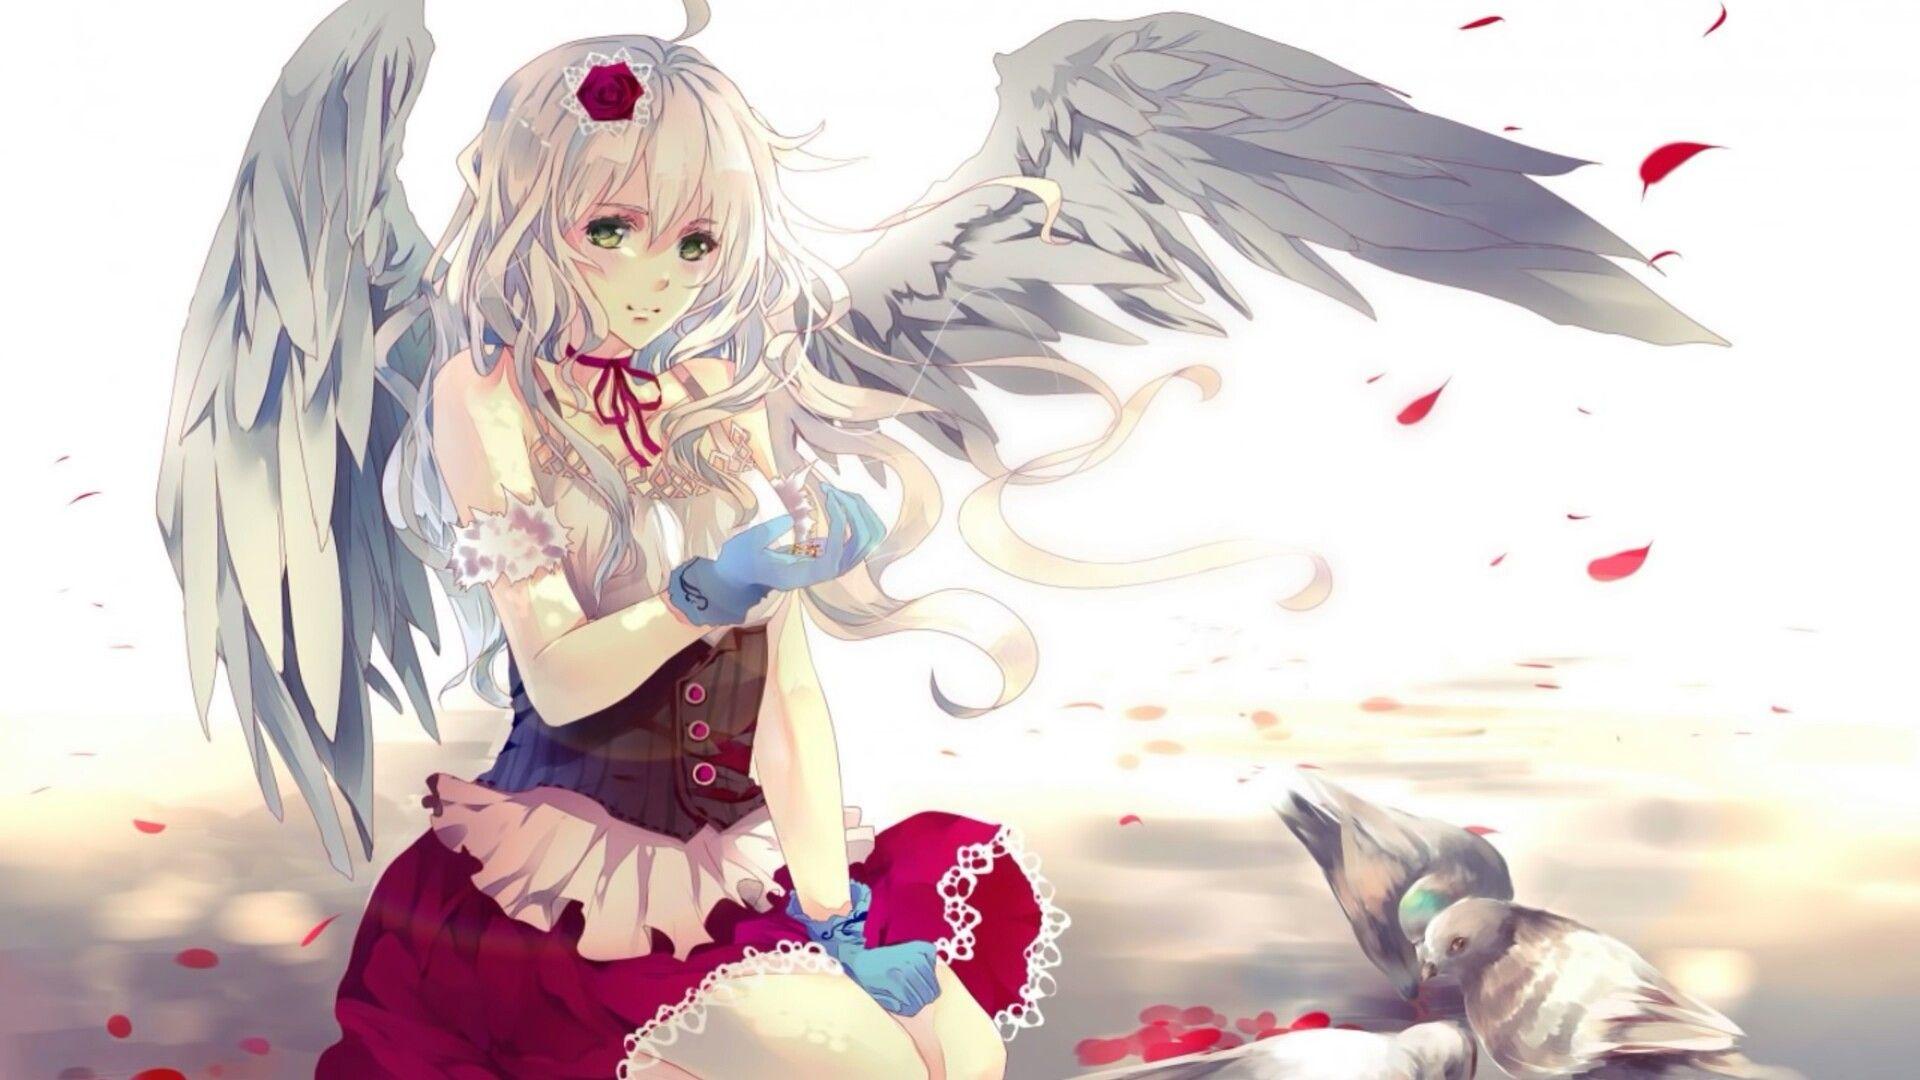 Anime Girl With Angel Wings Wallpaper. Wallpaper Studio 10. Tens